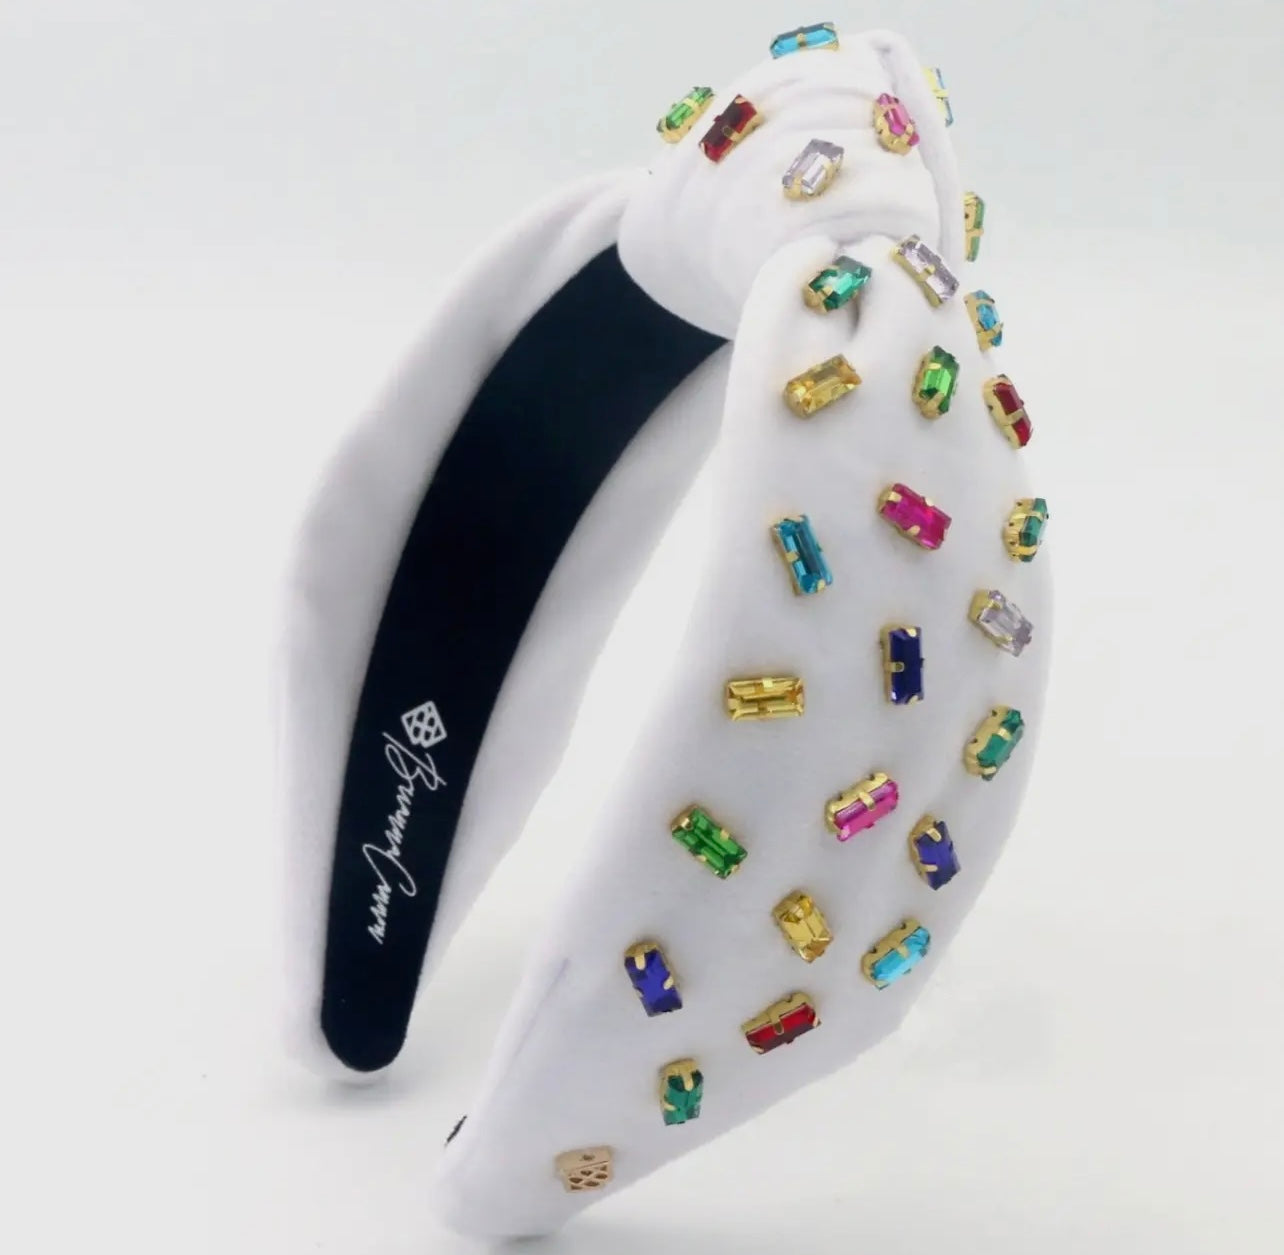 Brianna Cannon White Velvet Confetti Rainbow Crystal Headband